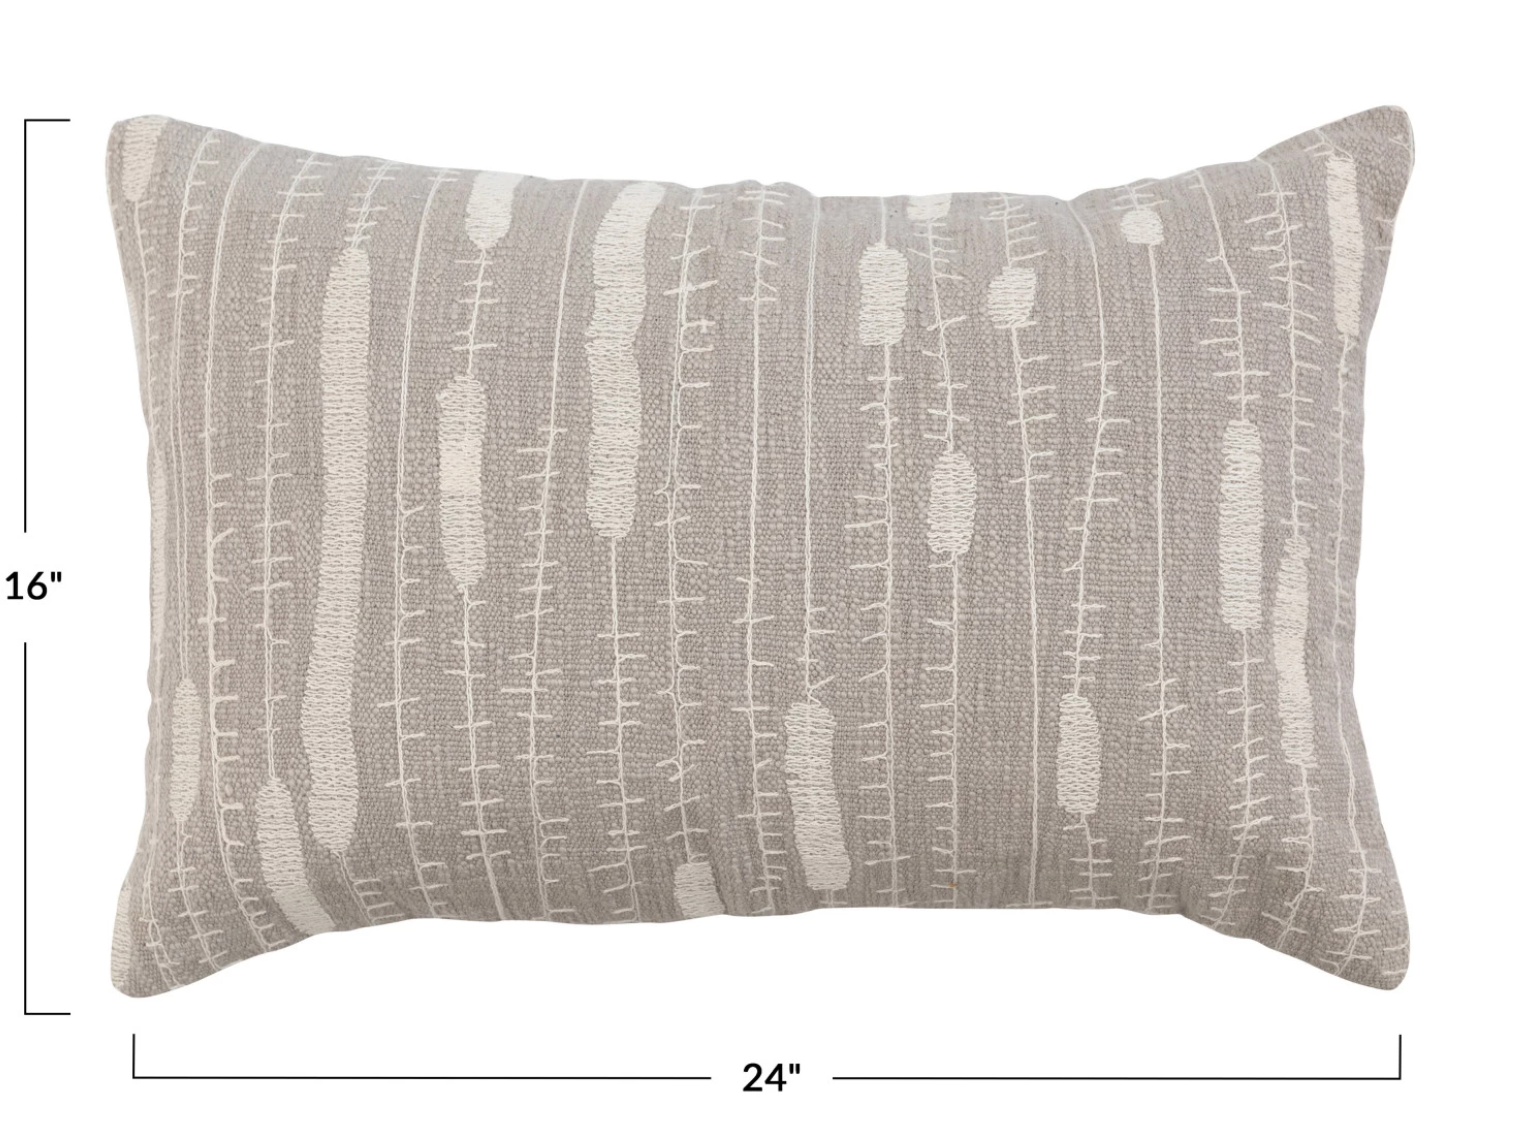 24" x 16" Cotton Lumbar Pillow w/ Embroidery